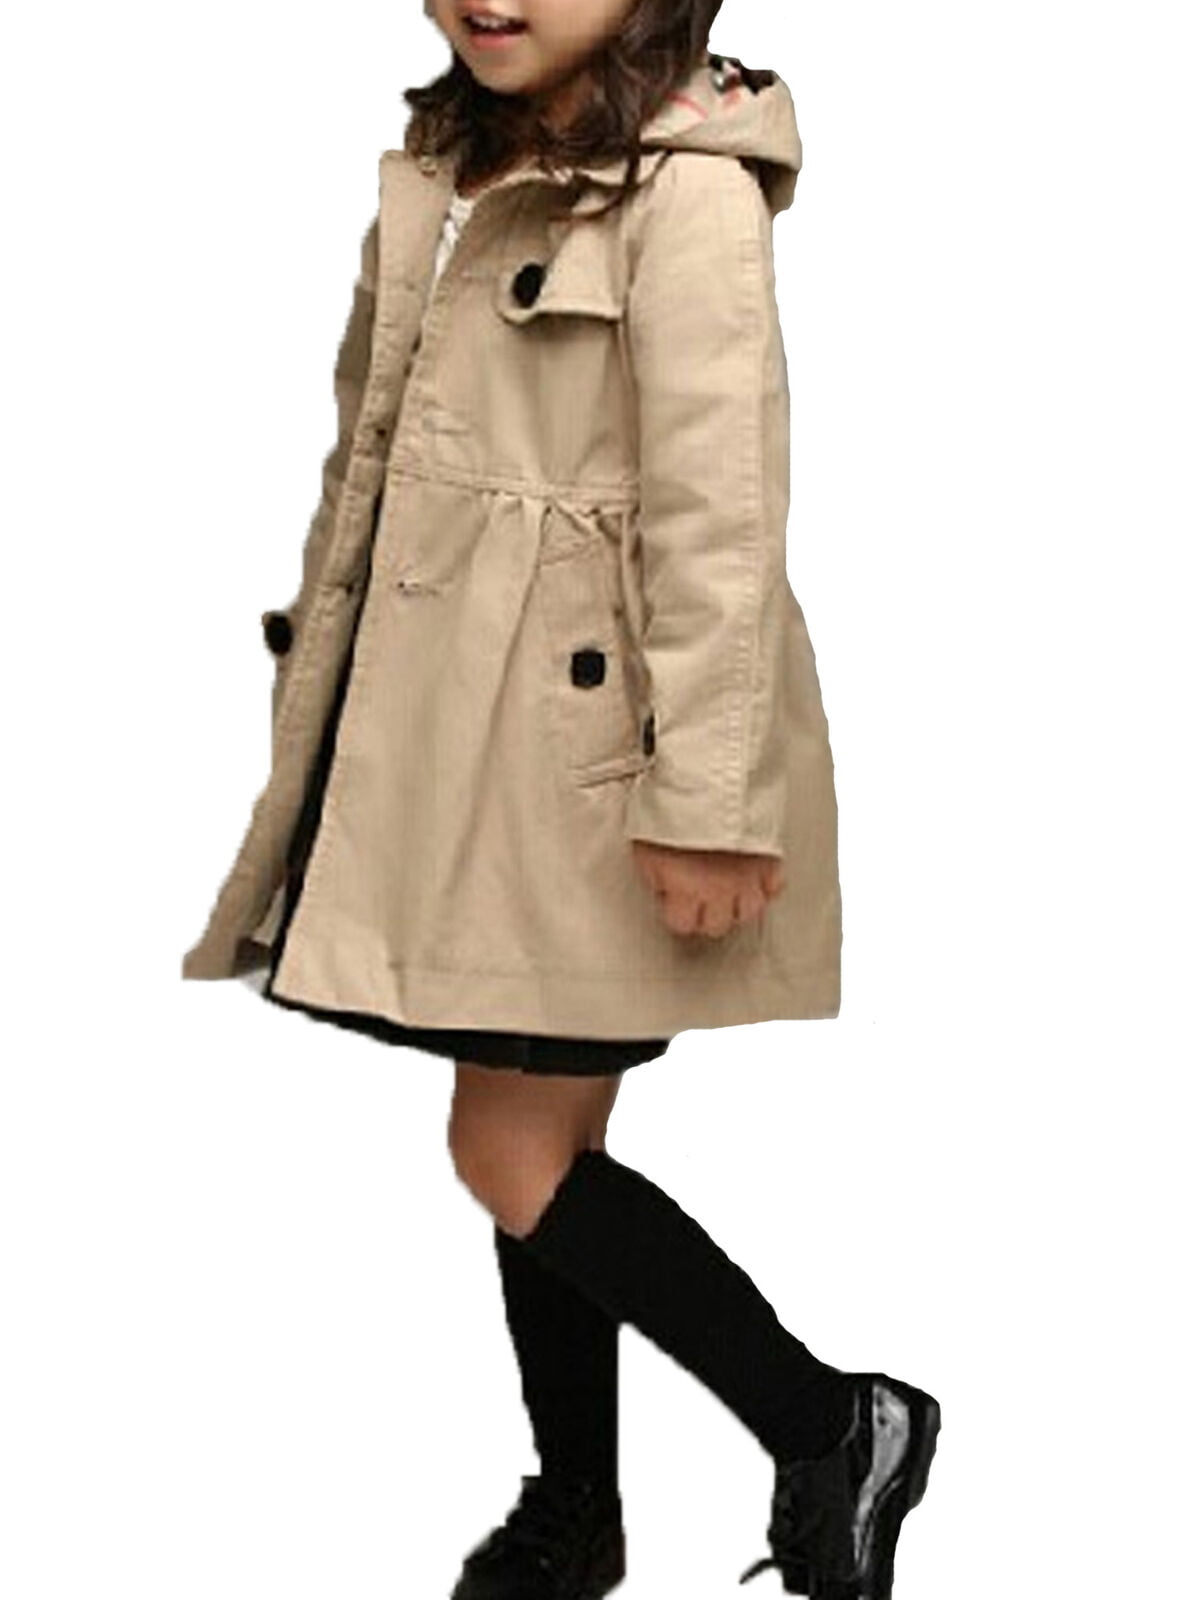 Girls Classic Hooded Trench Coat Kids Lightweight Jacket Waterproof Outwear Tops with Pocket Belt 4-13Y